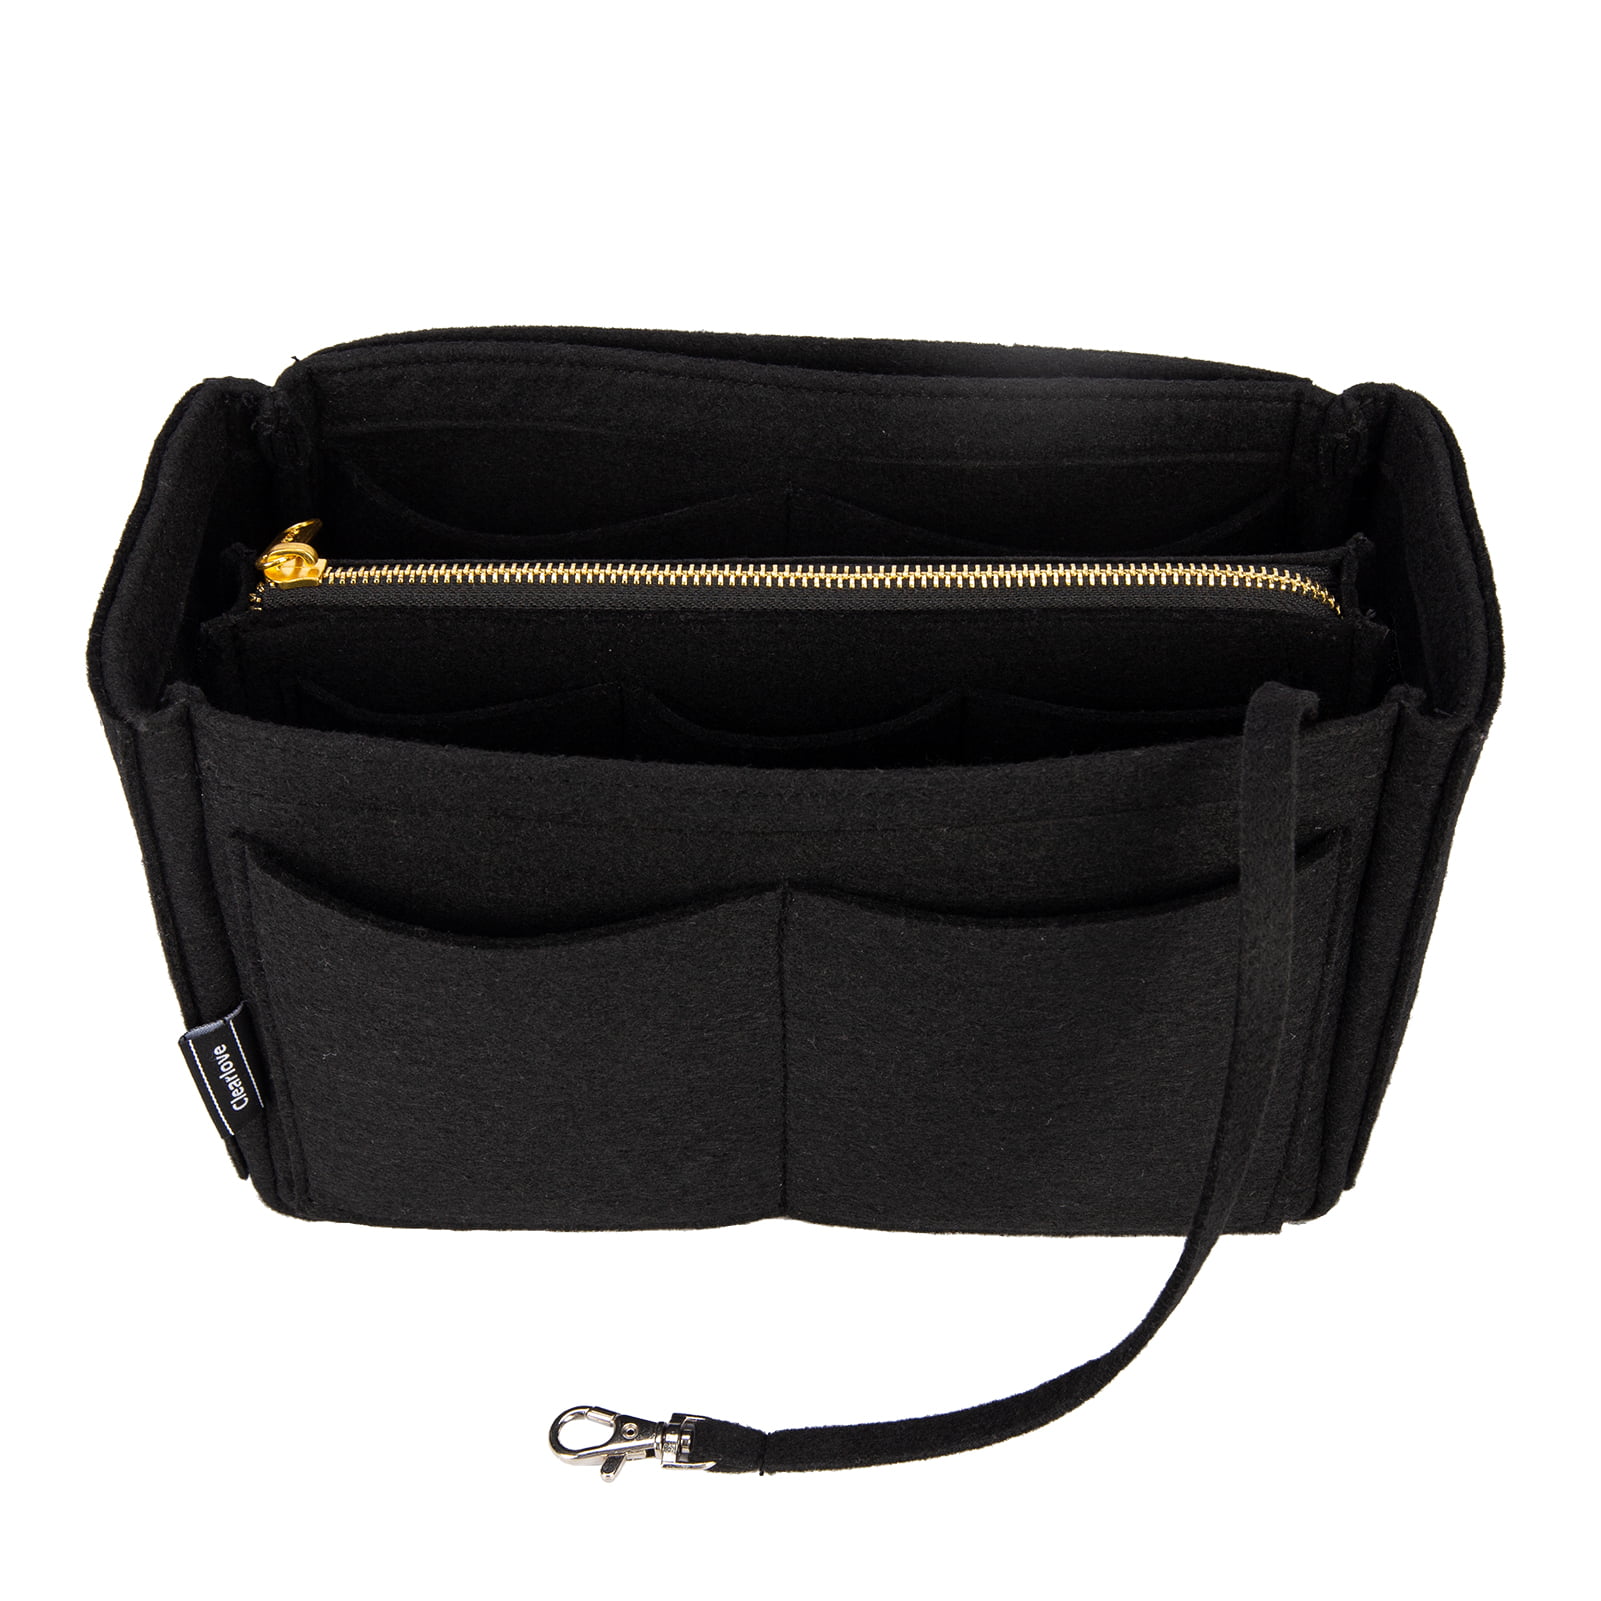 Felt Insert Bag Organizer Bag in Bag for Handbag Purse Organizer ââ‚¬â€œ  Lmieson Multi Pocket Insert In Bag fit with Tote & Handbag, Speedy 35 and  Neverfull MM, Beige (Large) : 